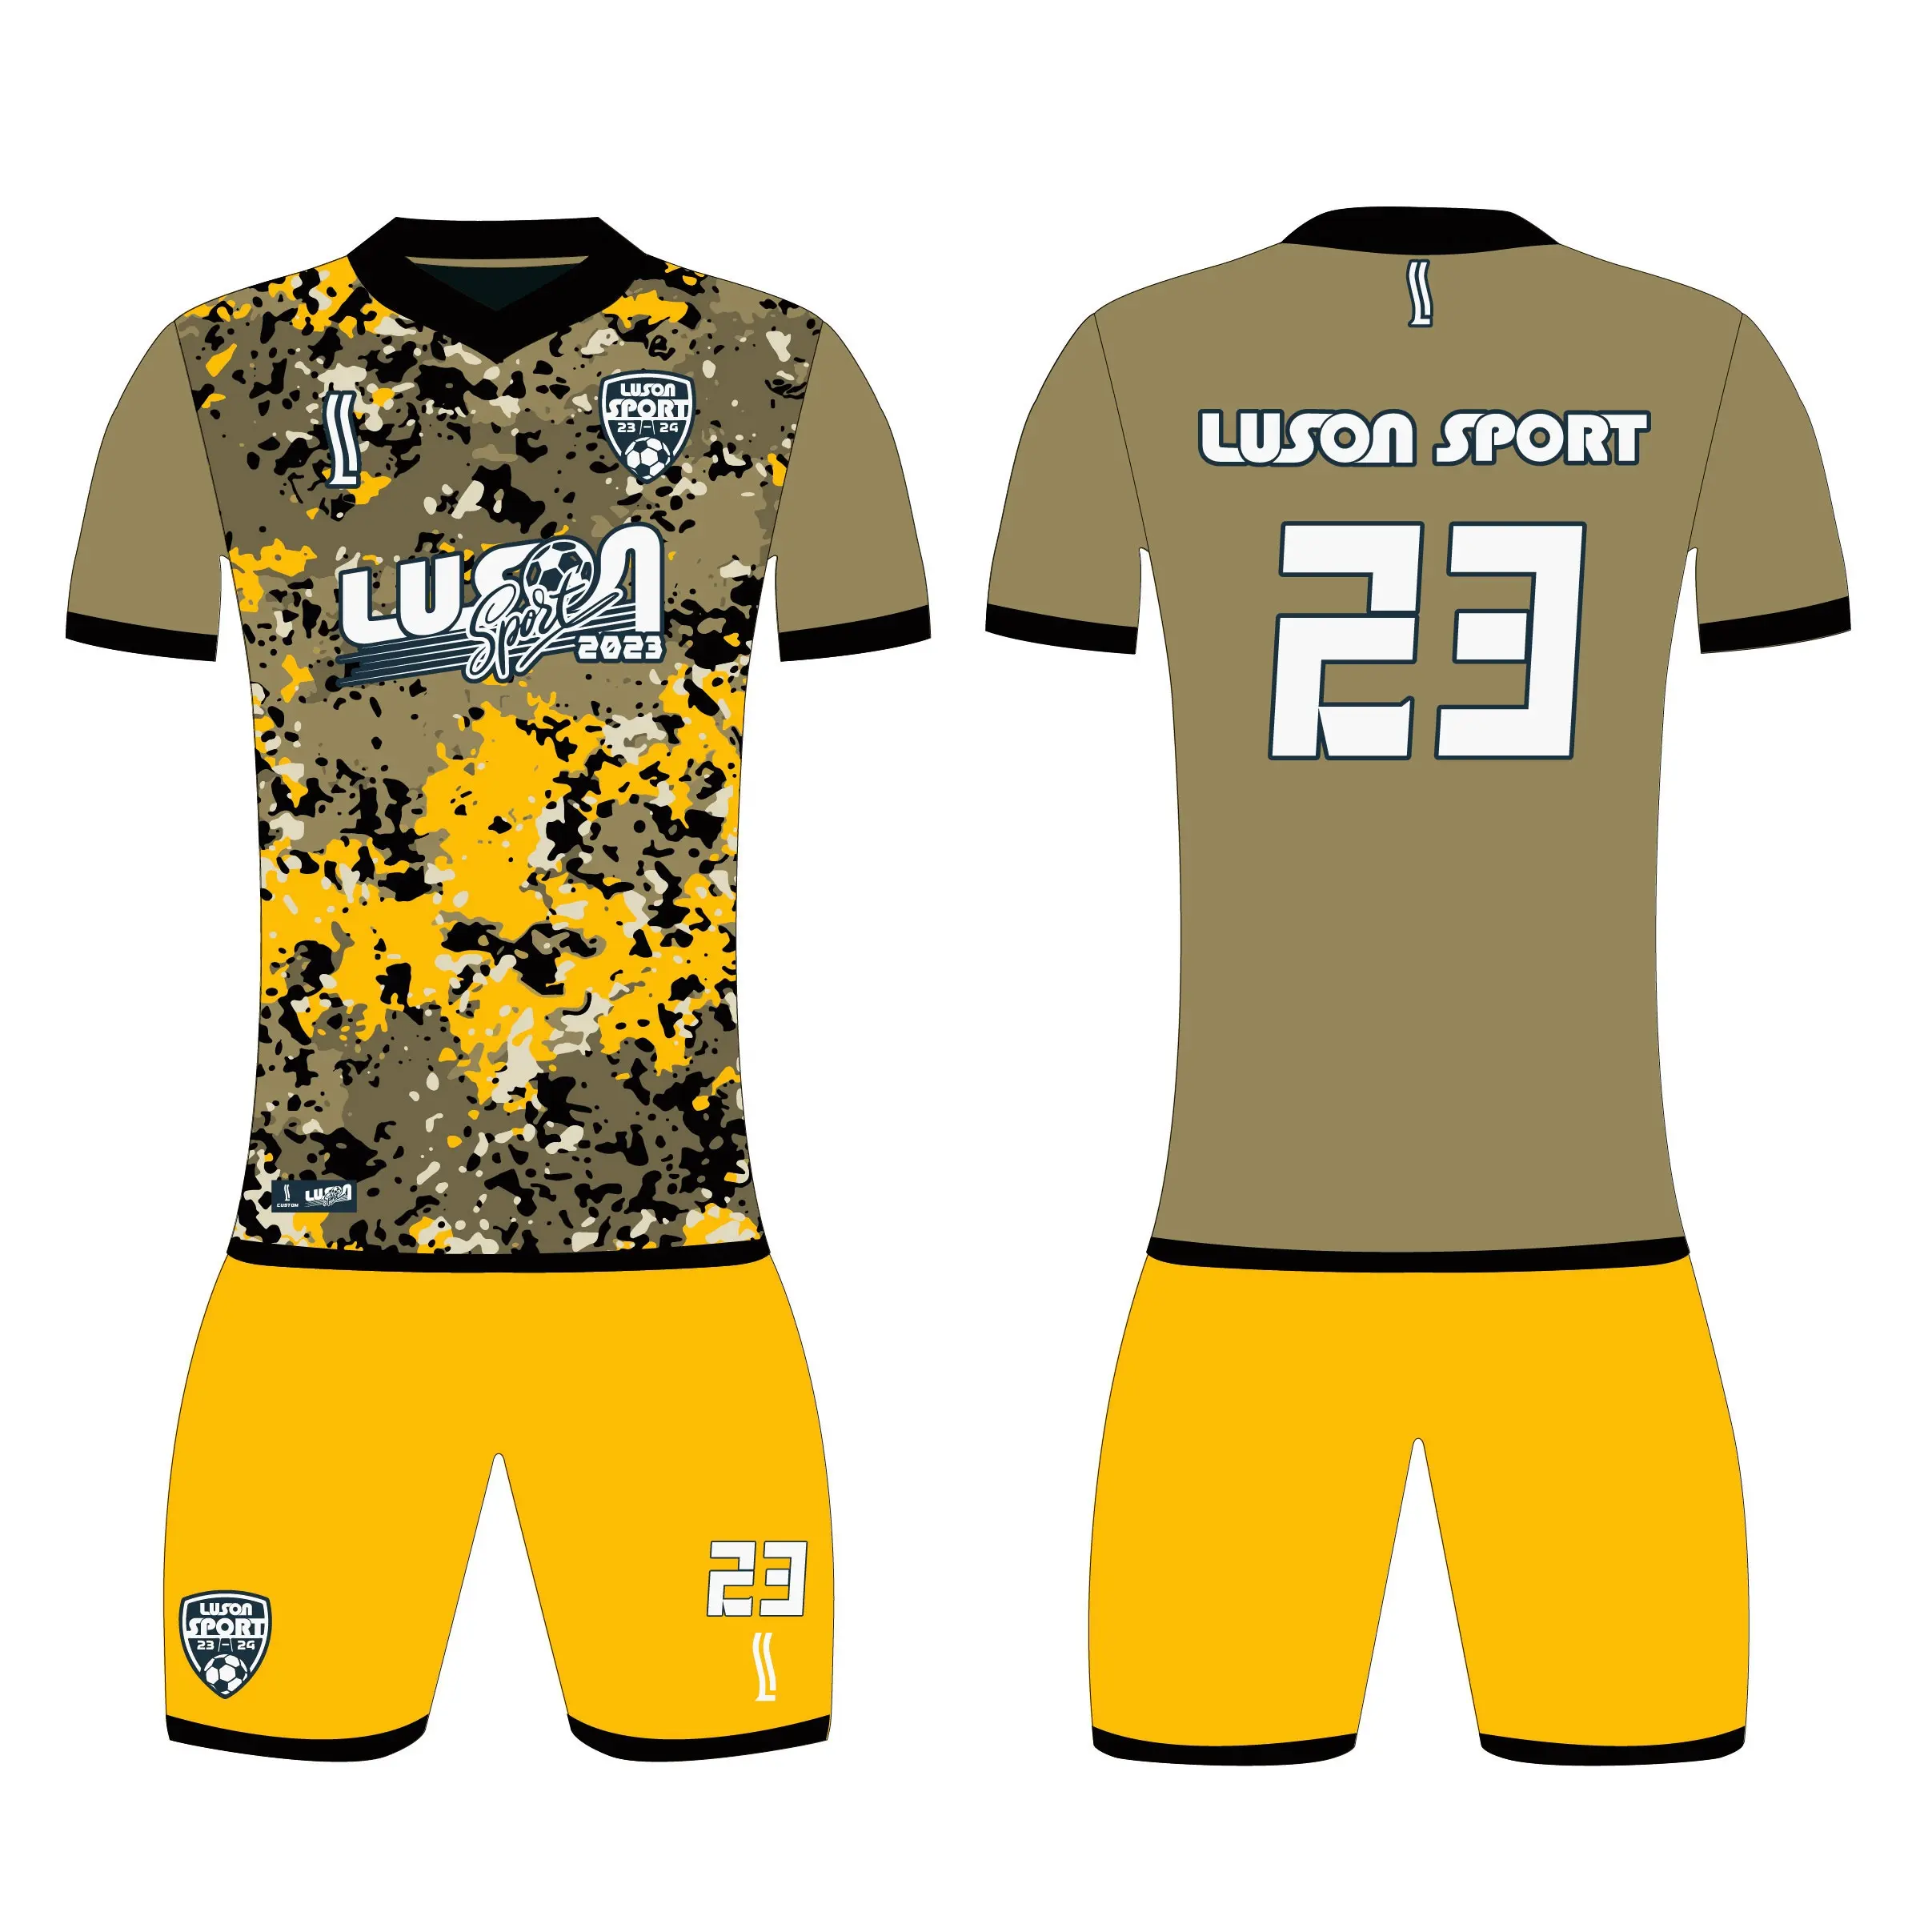 Luson Thai Kwaliteit Voetbal Jersey Kleding Originele Uniform Retro Voetbal Truien